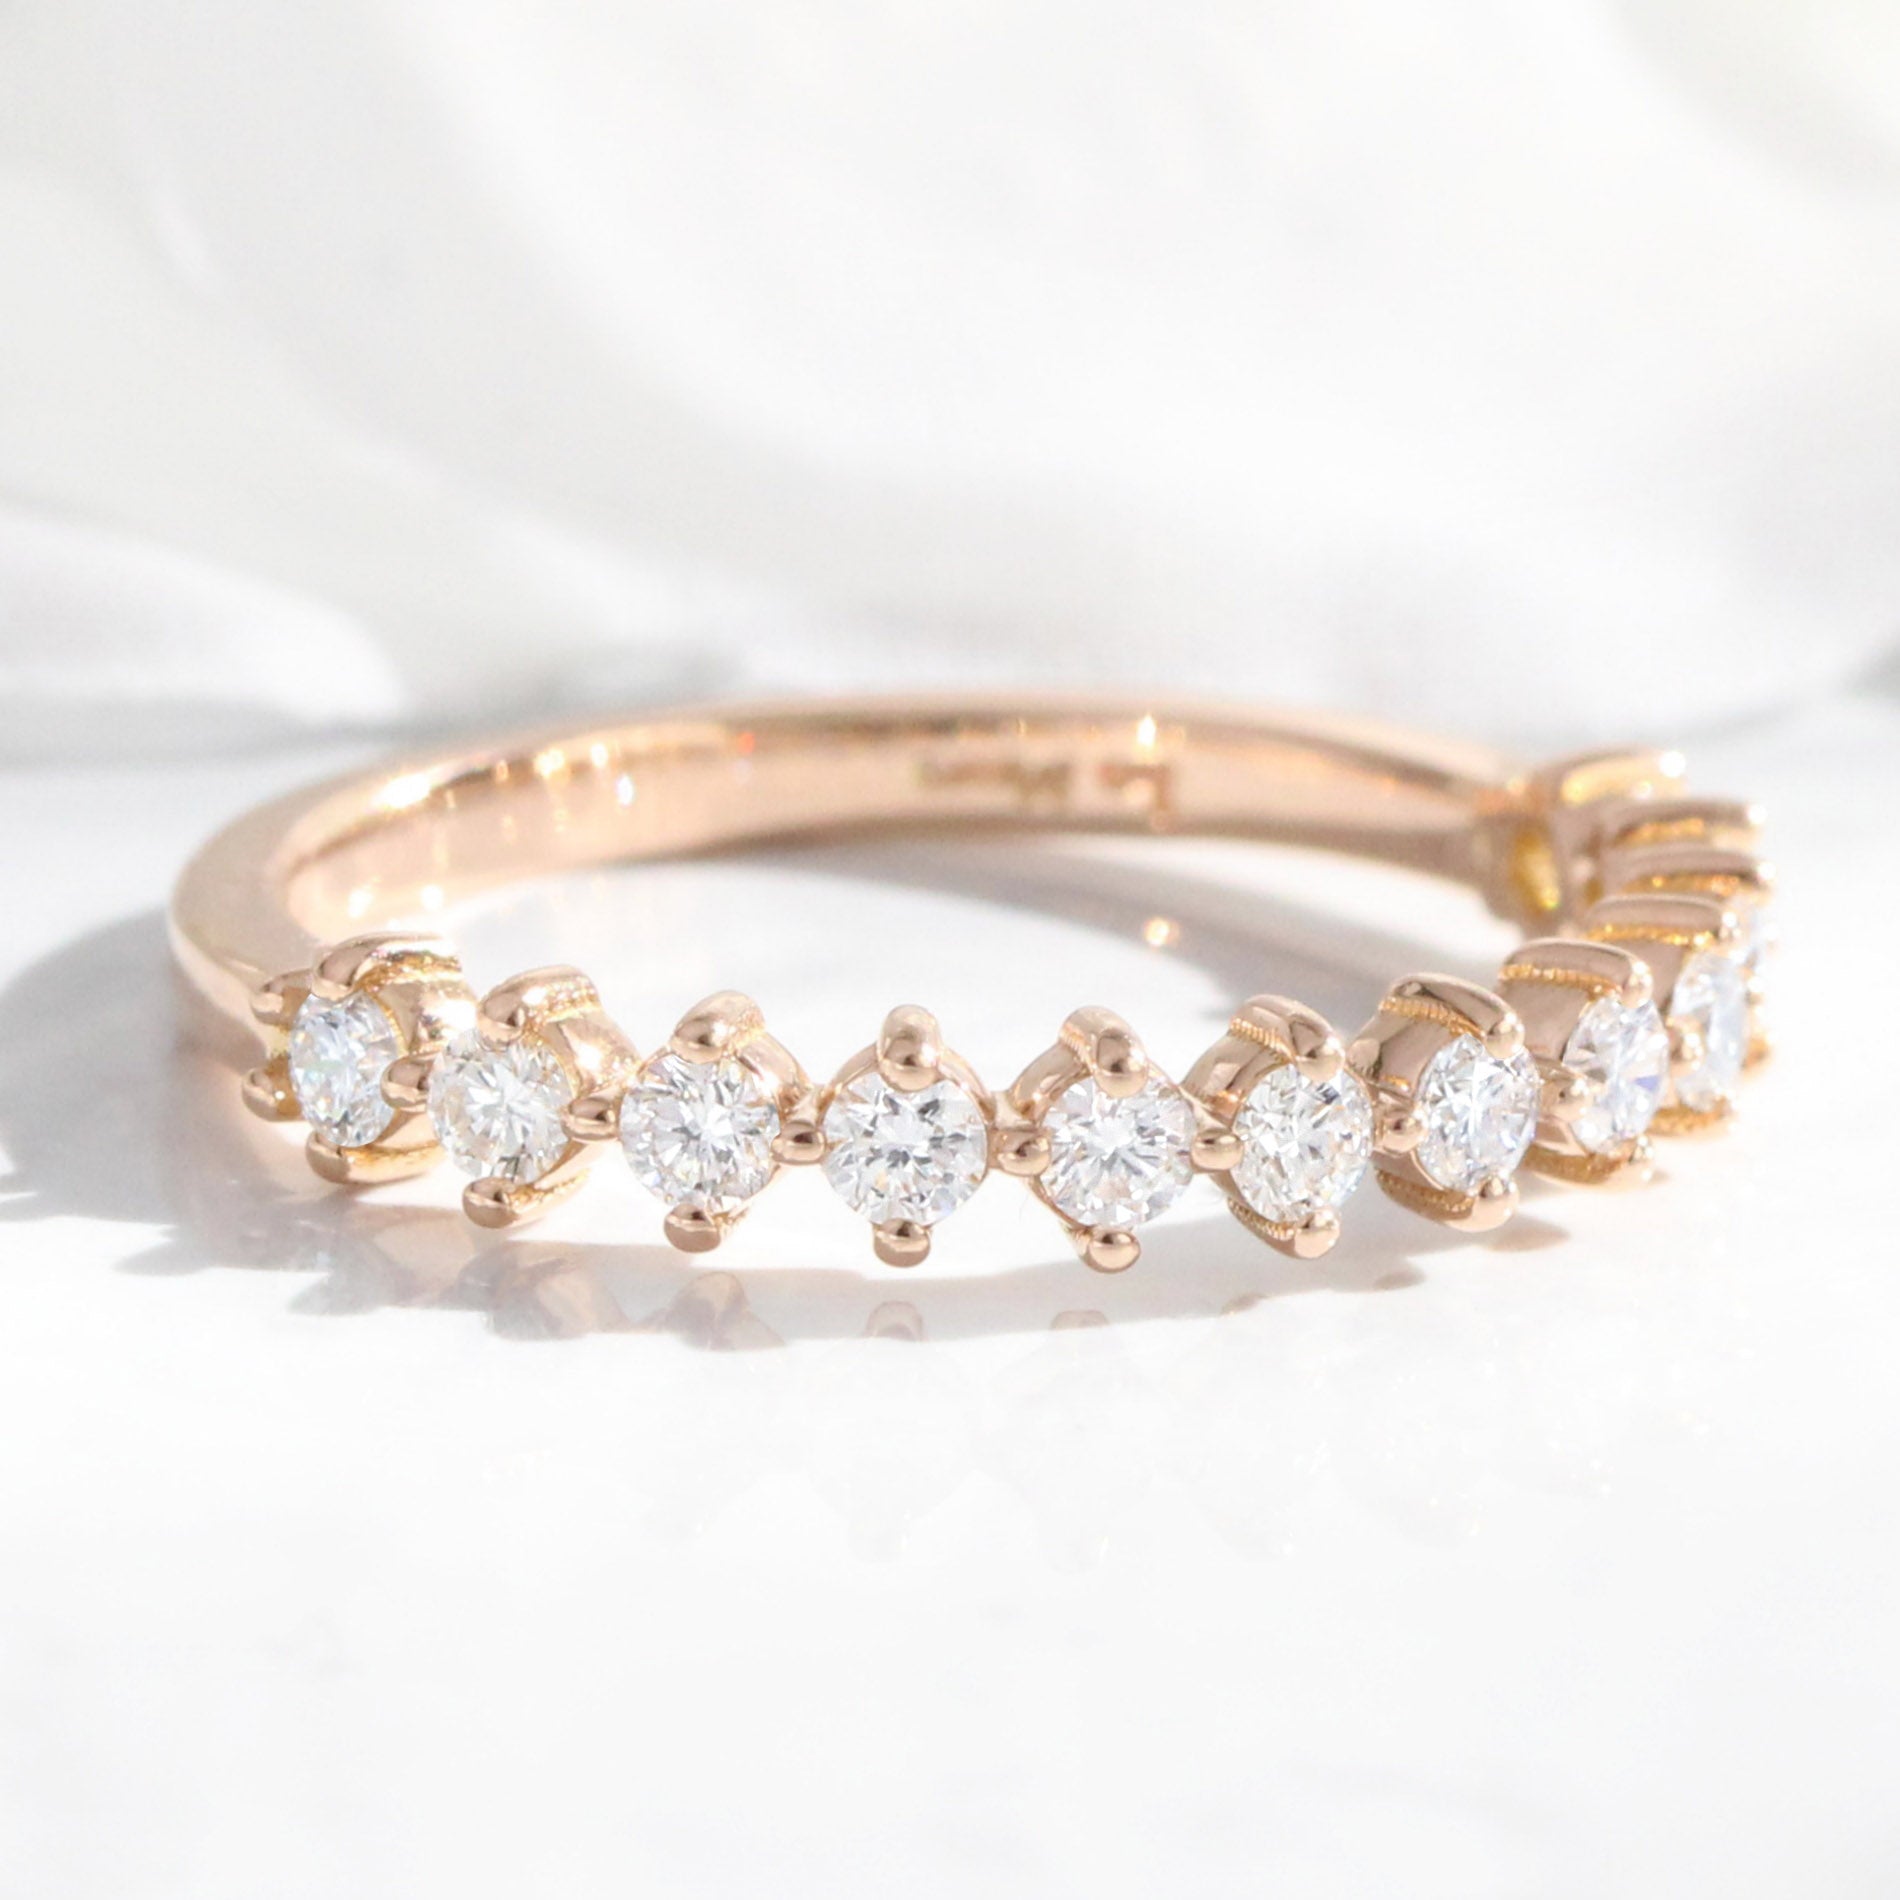 Large diamond wedding ring rose gold 4 prong half eternity band la more design jewelry